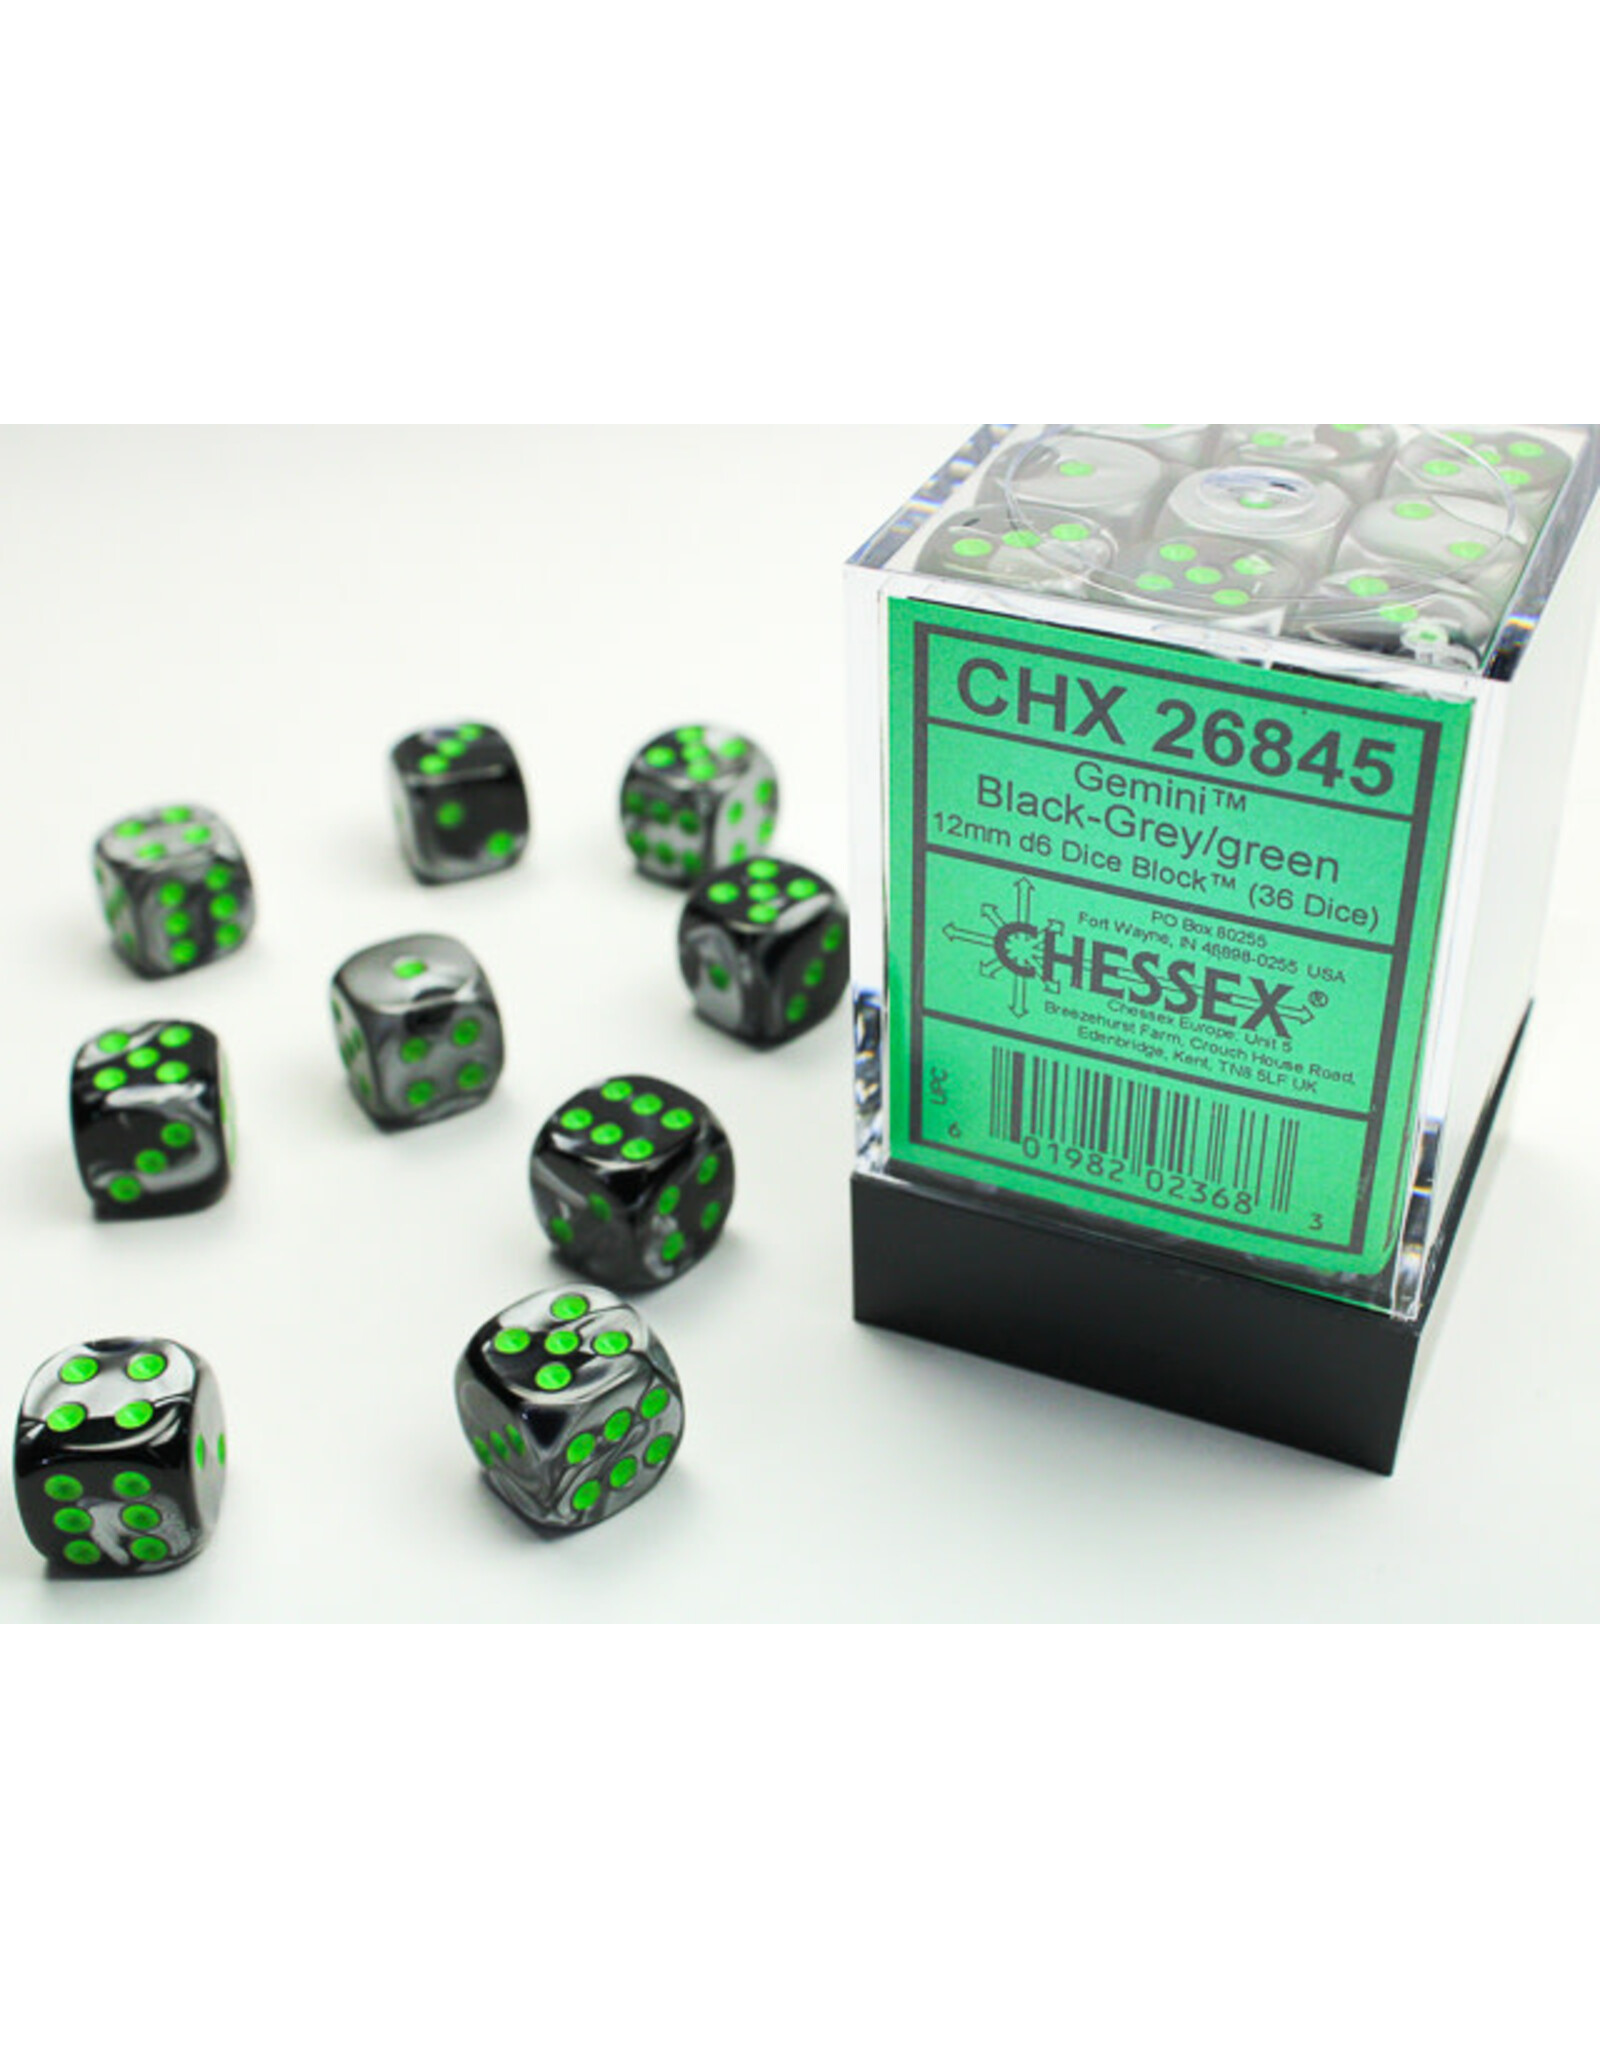 Chessex Gemini Black-Grey/Green Dice [36D6]